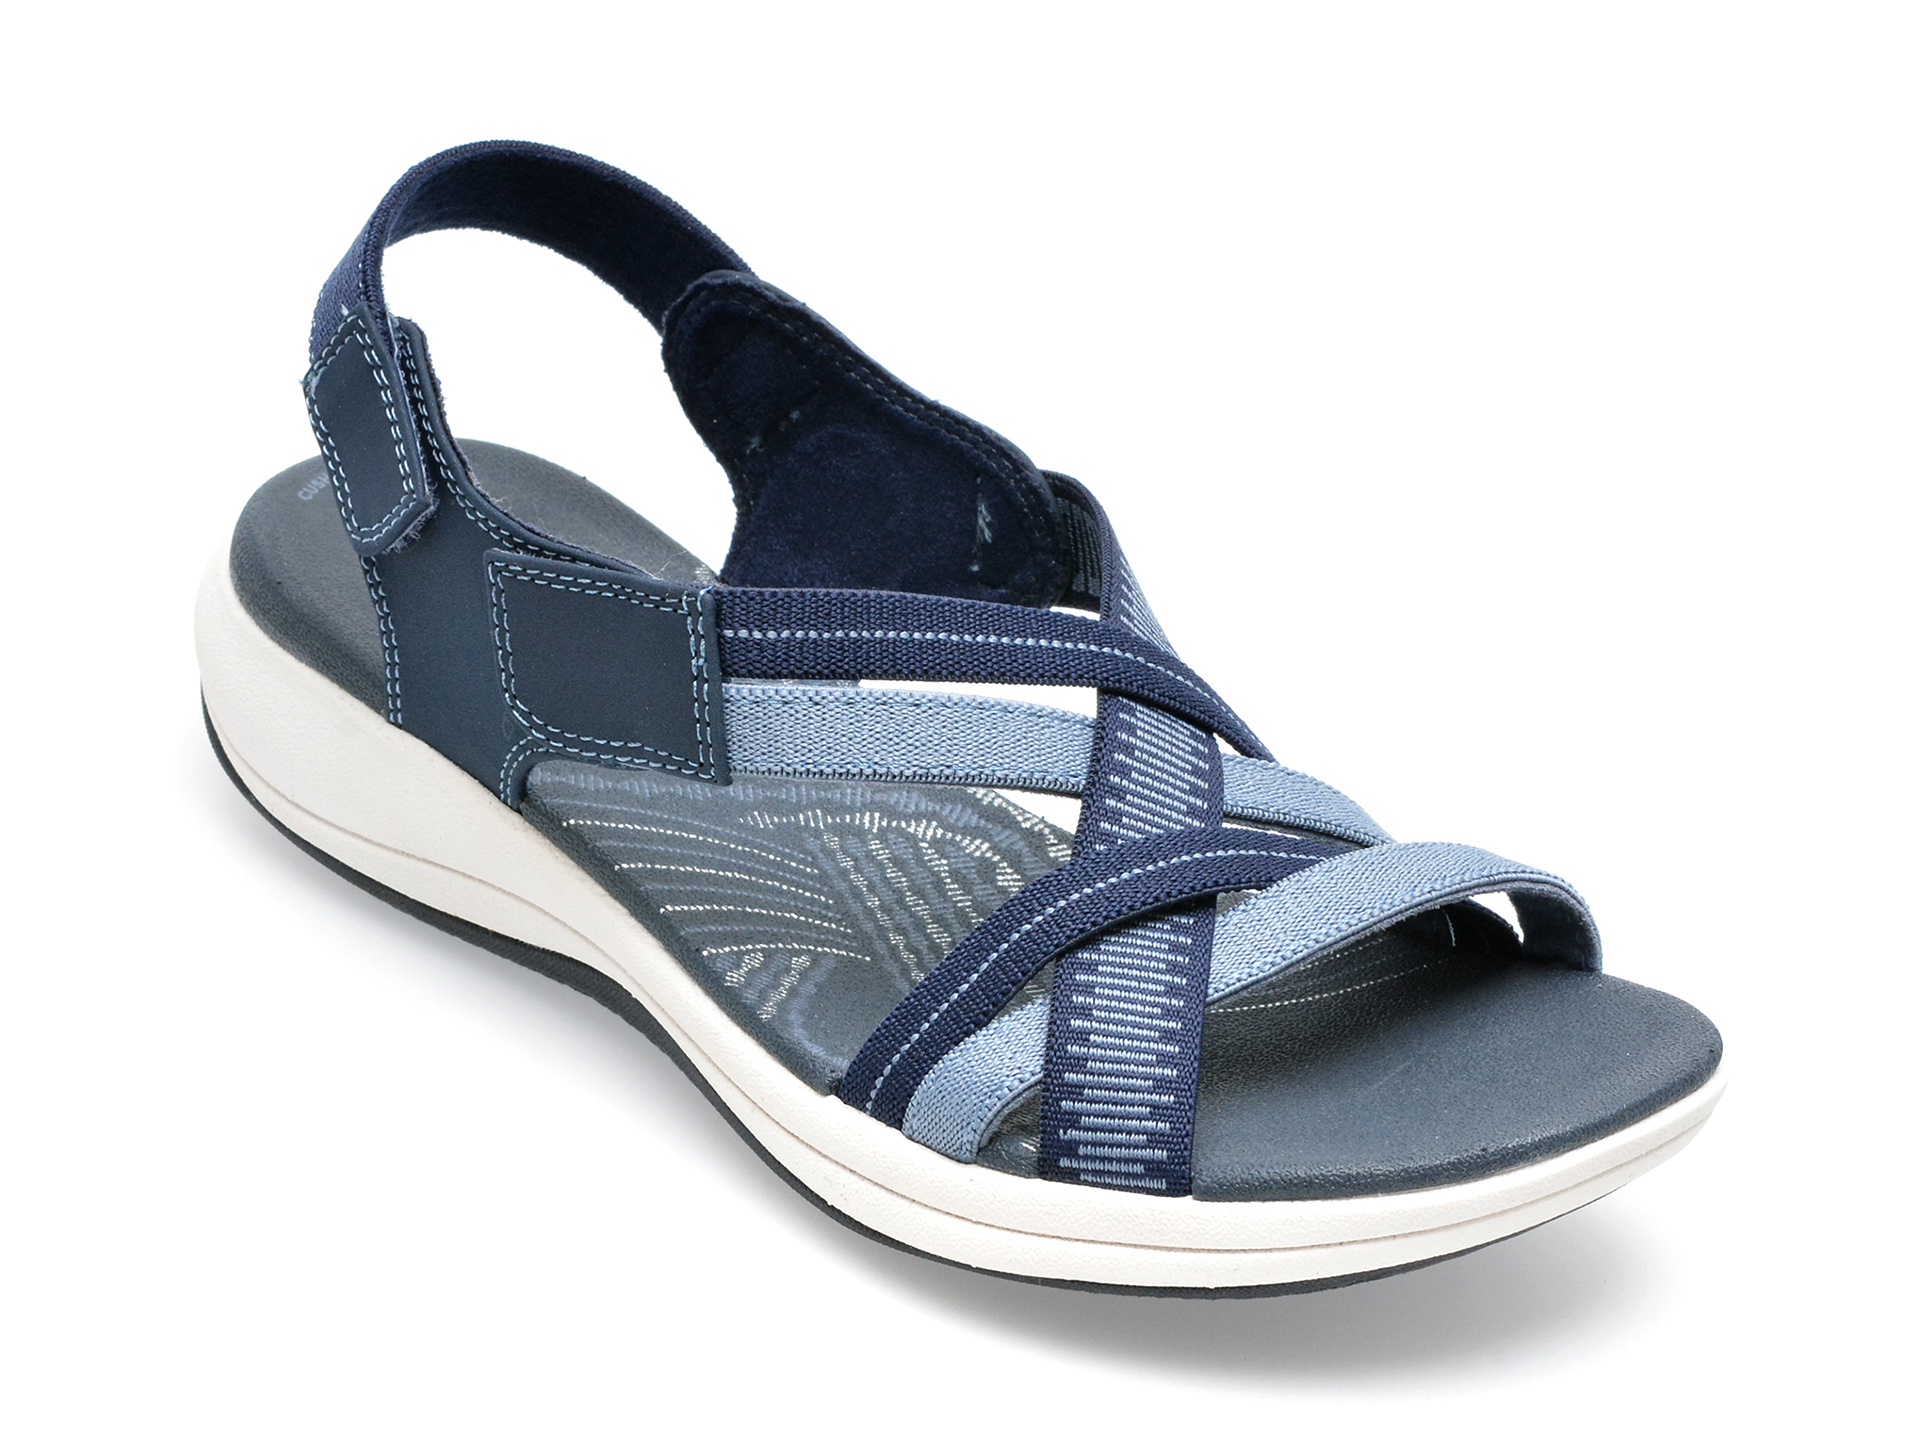 Sandale CLARKS bleumarin, MIRA IVY 0912, din material textil